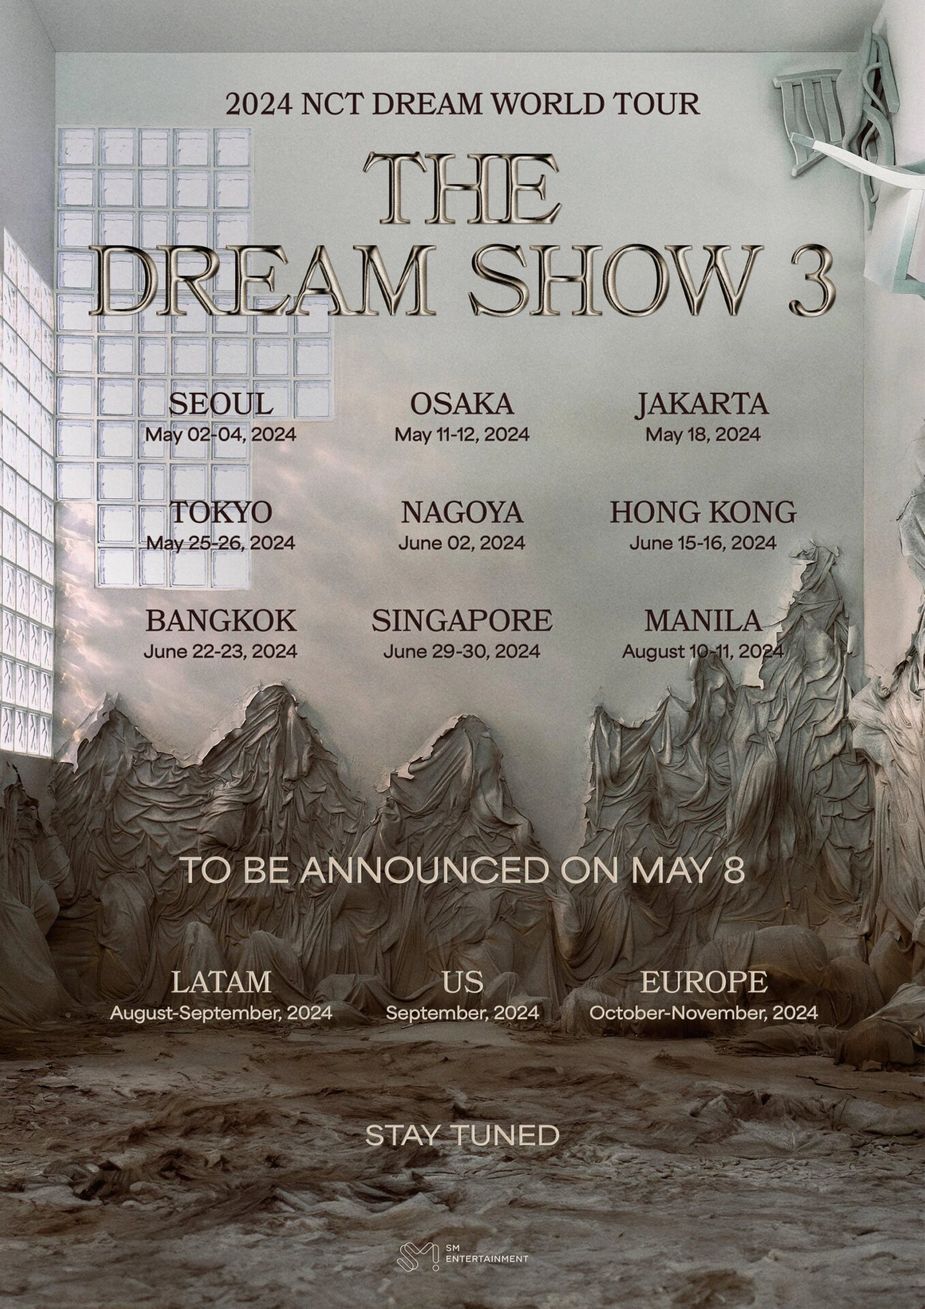 nct-dream-2024-world-tour-the-dream-show-3-announcement-v0-c0i1rl712njc1